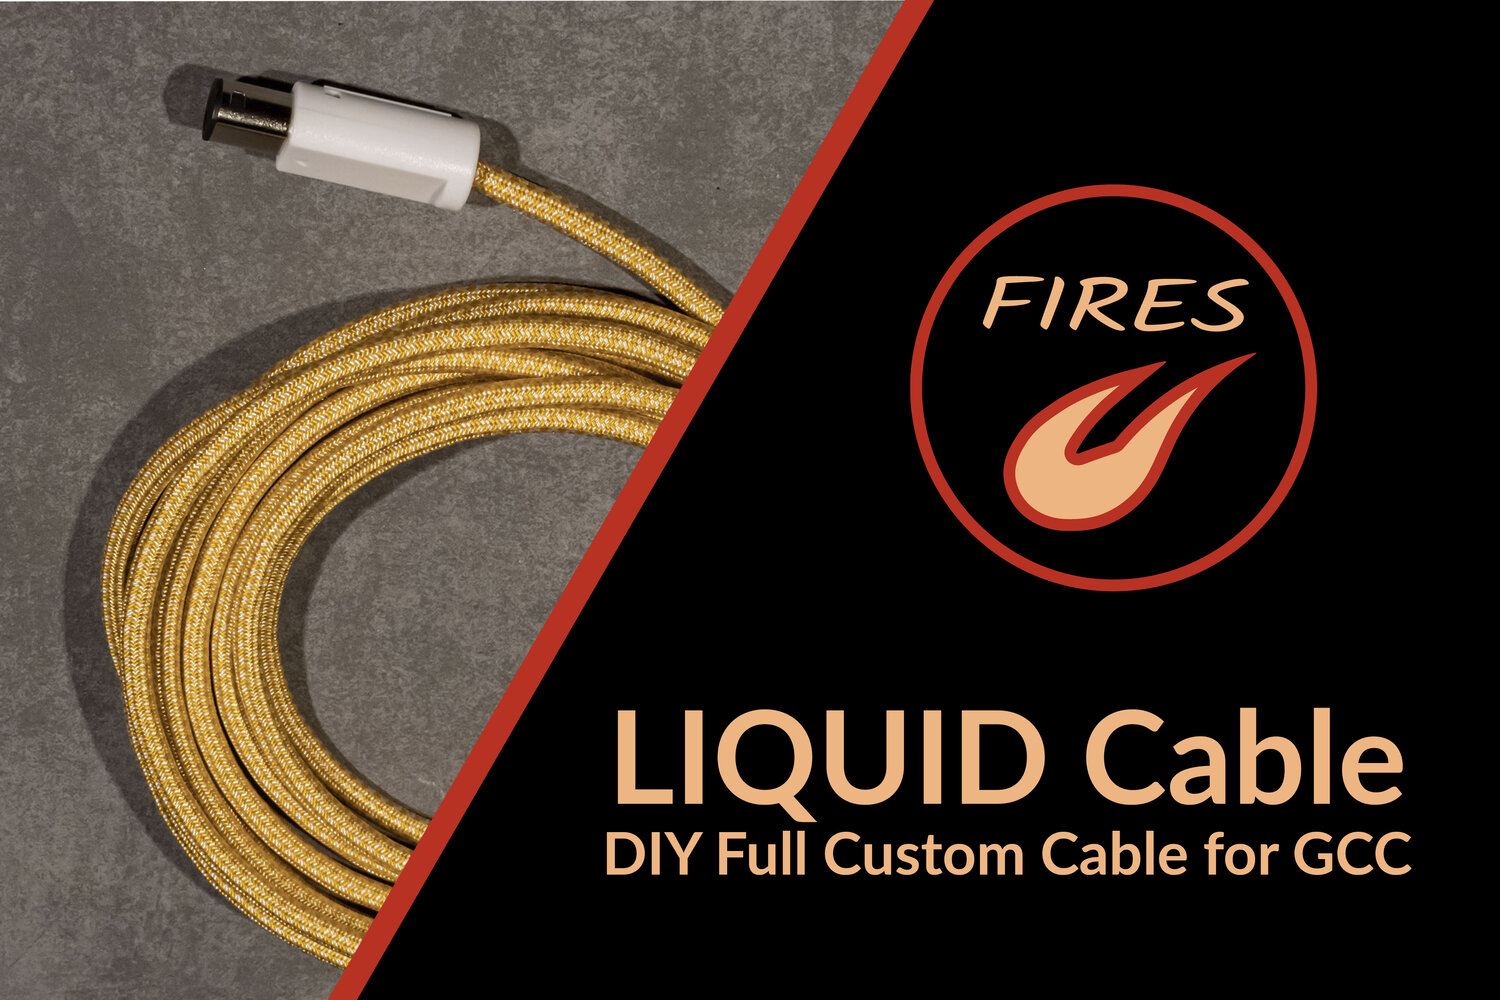 hormigón Cha Gracioso LIQUID Cable - DIY Custom Cable for GCC — FIRES Custom Controller